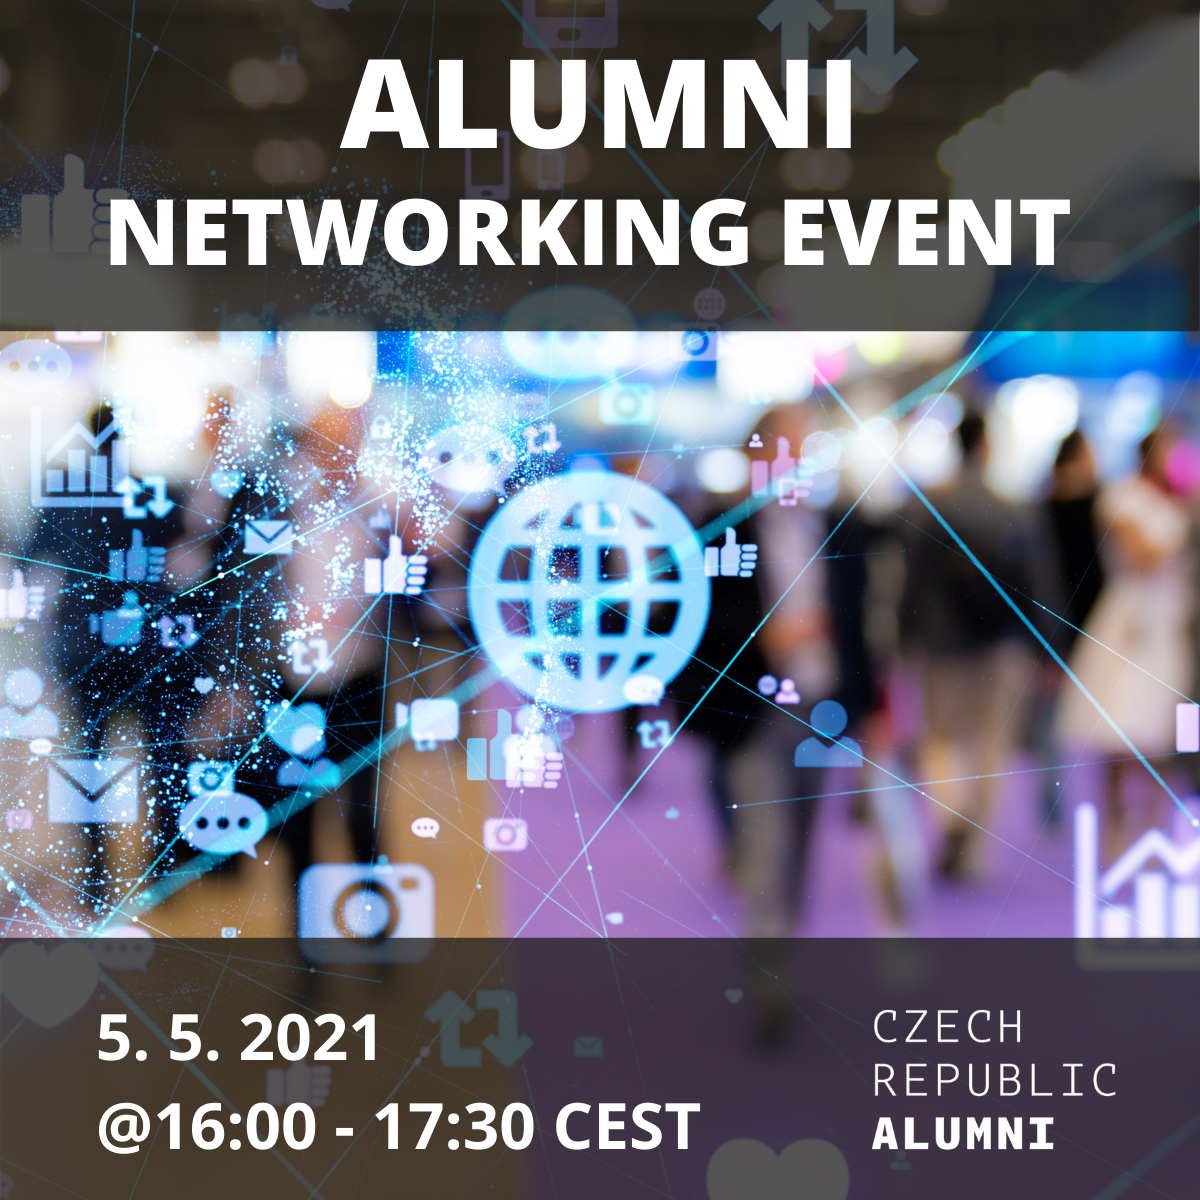 Alumni networking event